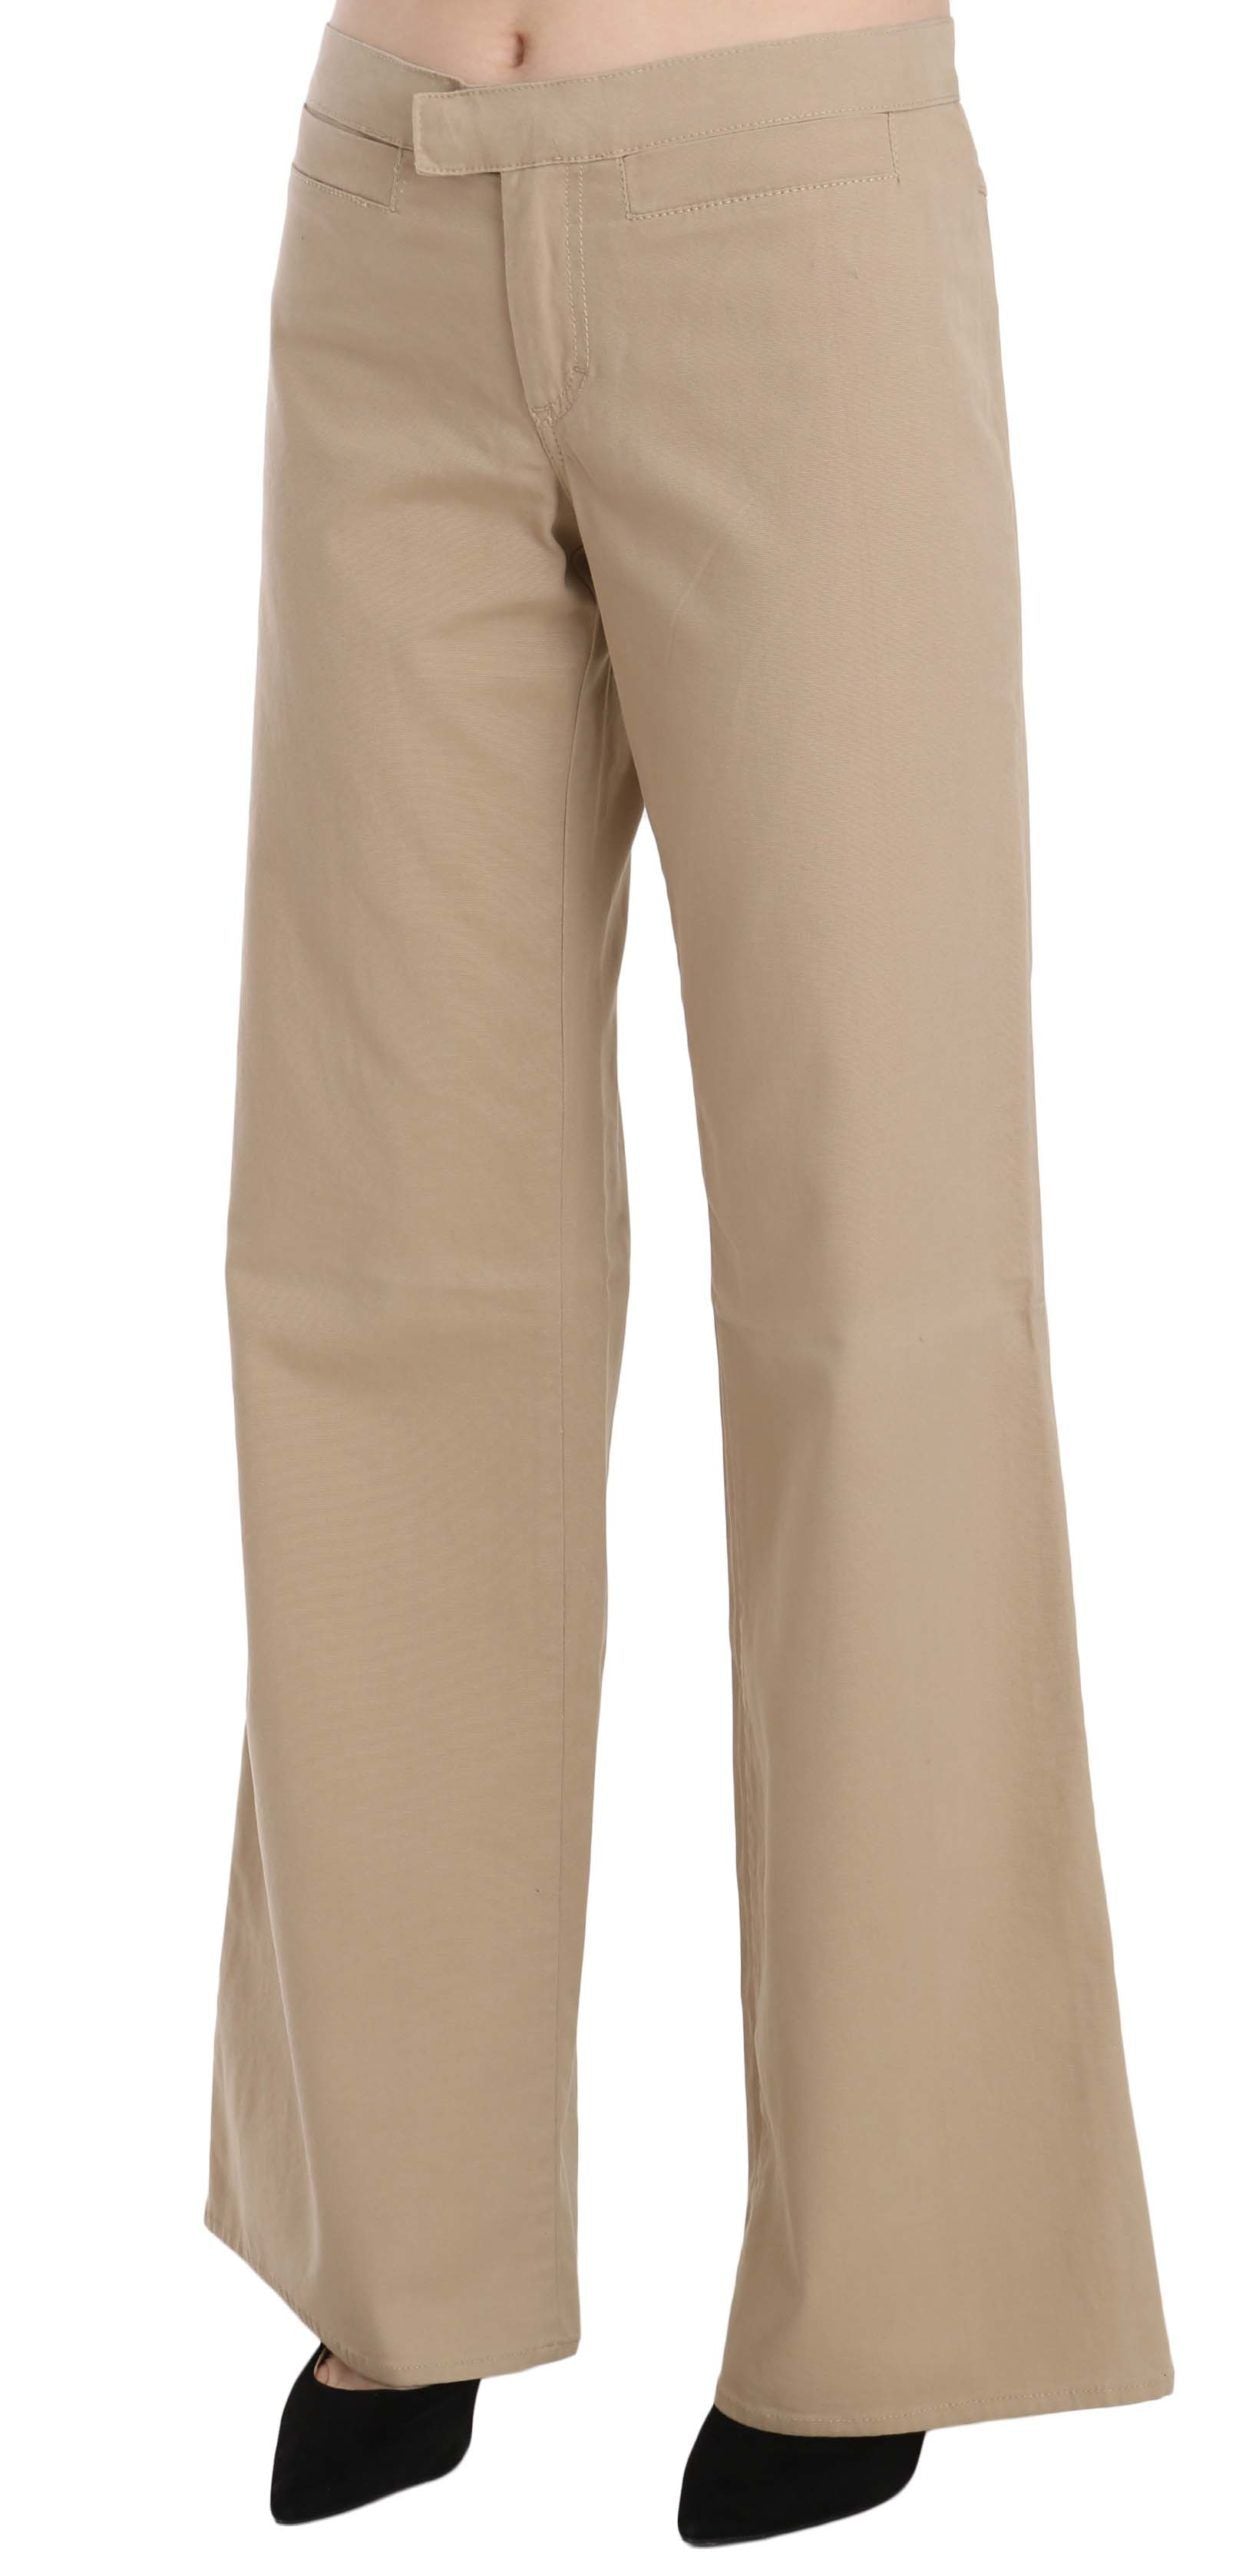 Just Cavalli Beige Cotton Mid Waist Flared Trousers Pants